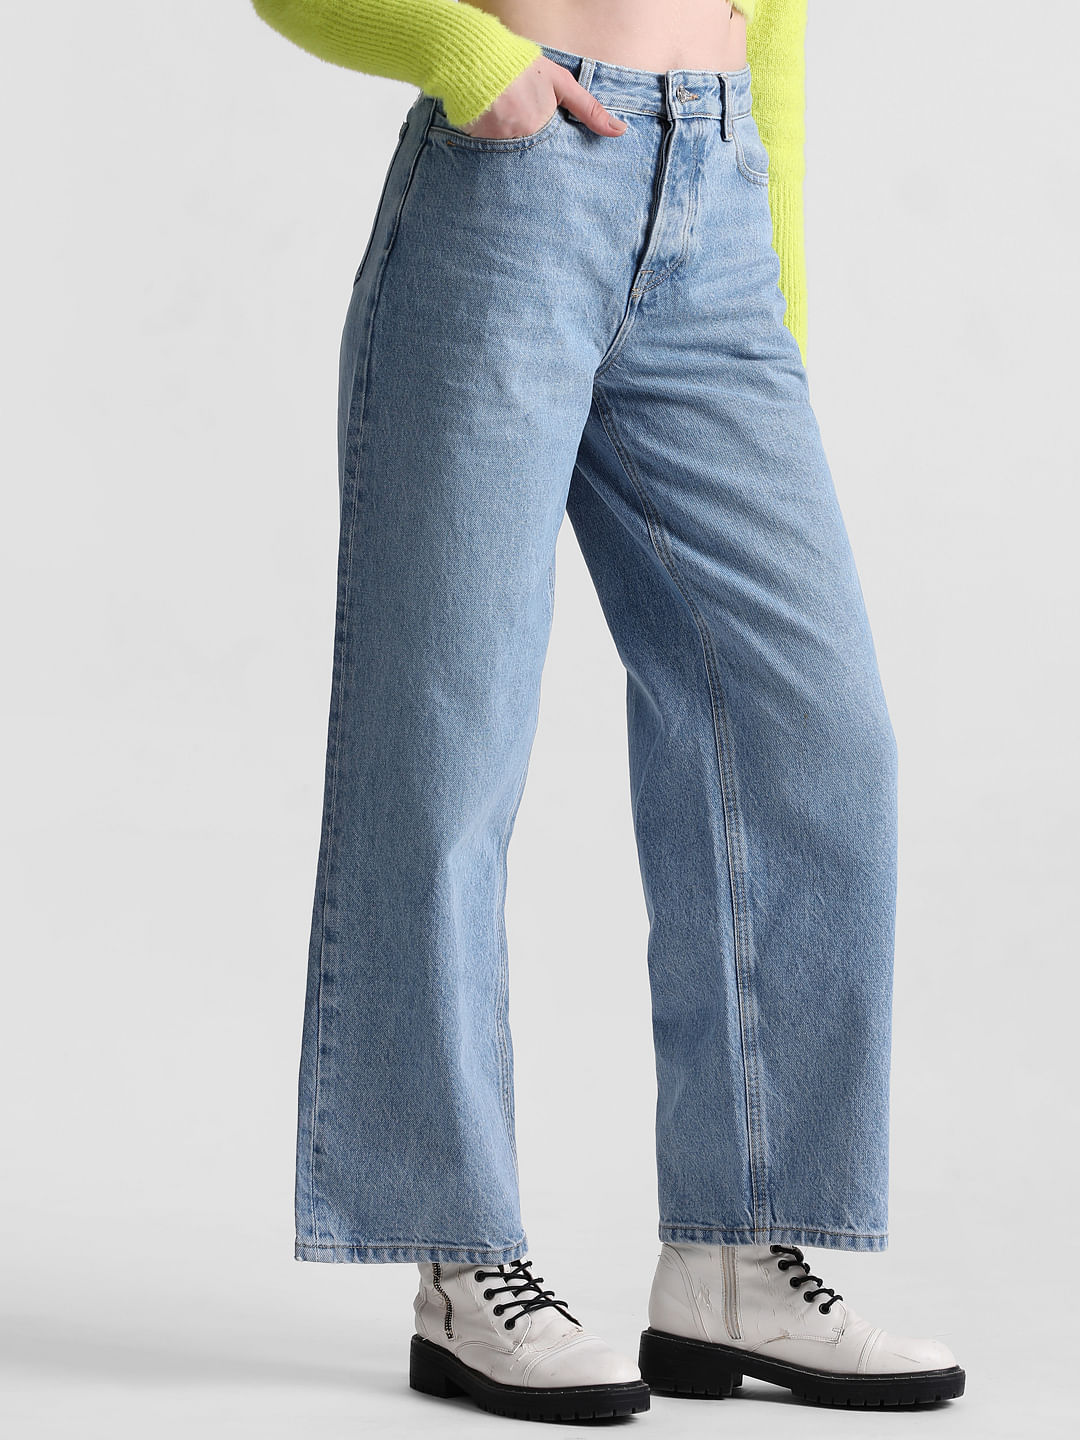 Buy Women Boyfriends Jeans High Waist Baggy Denim Pants Wide Leg Jeans Loose  fit Straight Jeans at Amazon.in